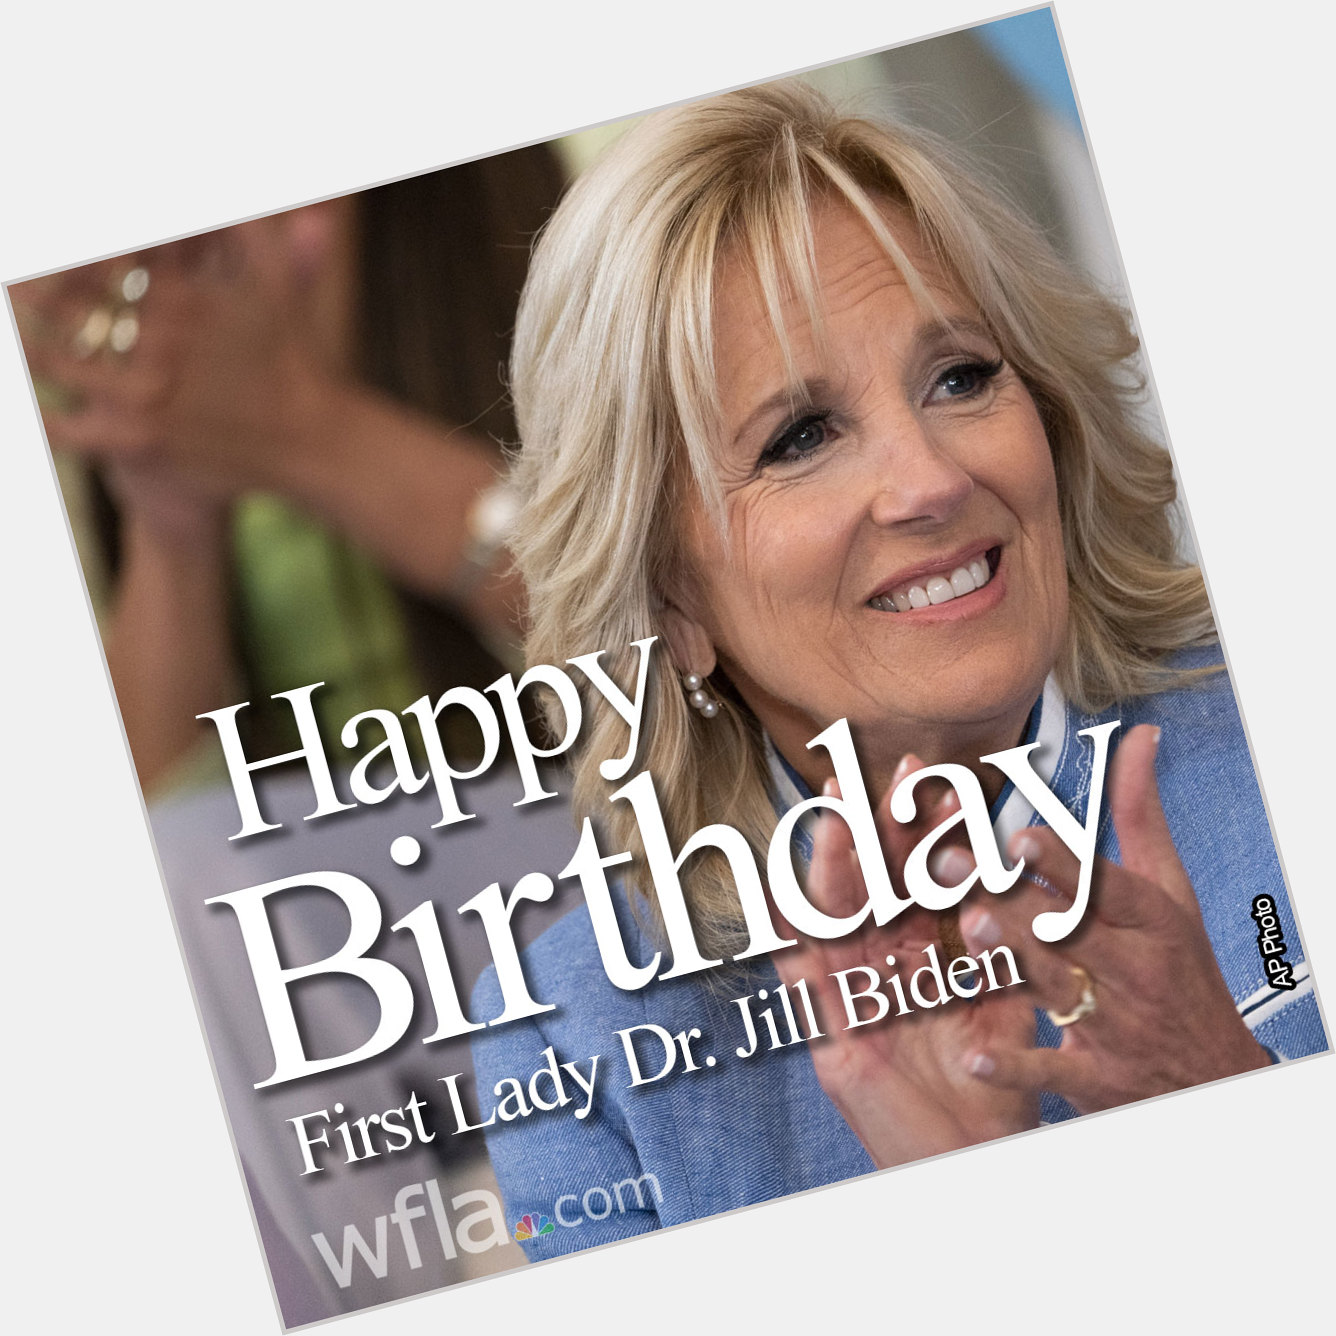 HAPPY BIRTHDAY Join us in wishing a happy 71st birthday to Dr. Jill Biden!  